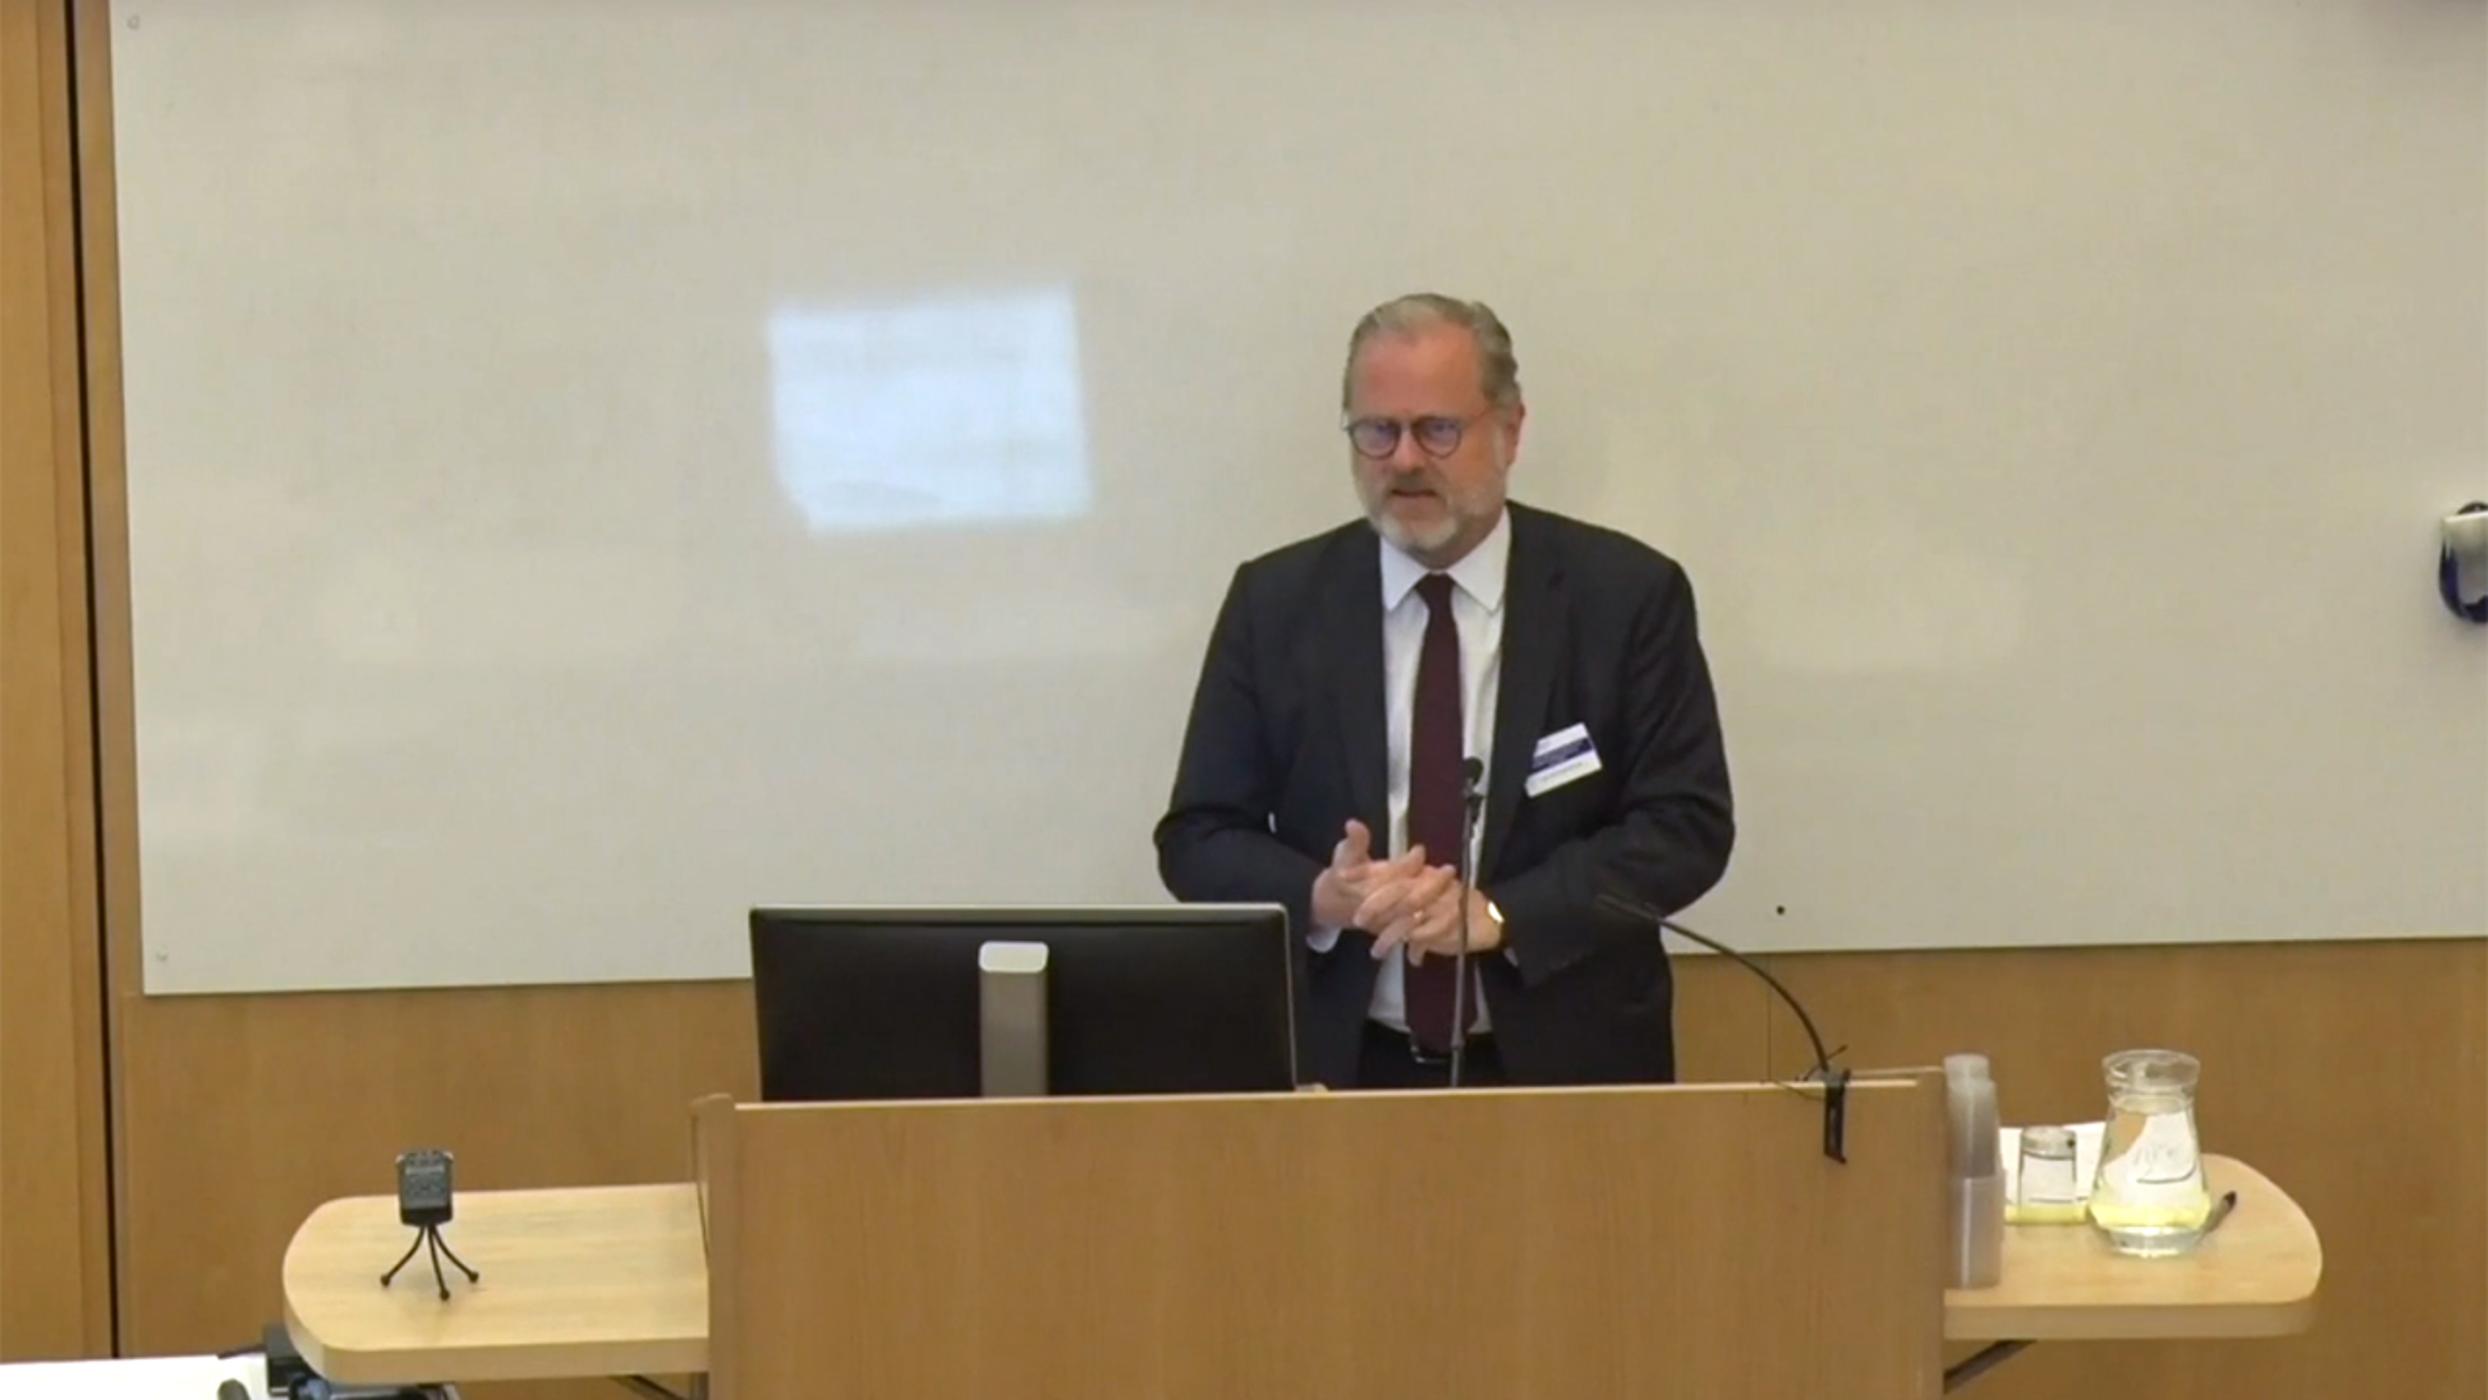 'Progress on EBP Capability in Sweden': Erik Wennerstrom (audio)